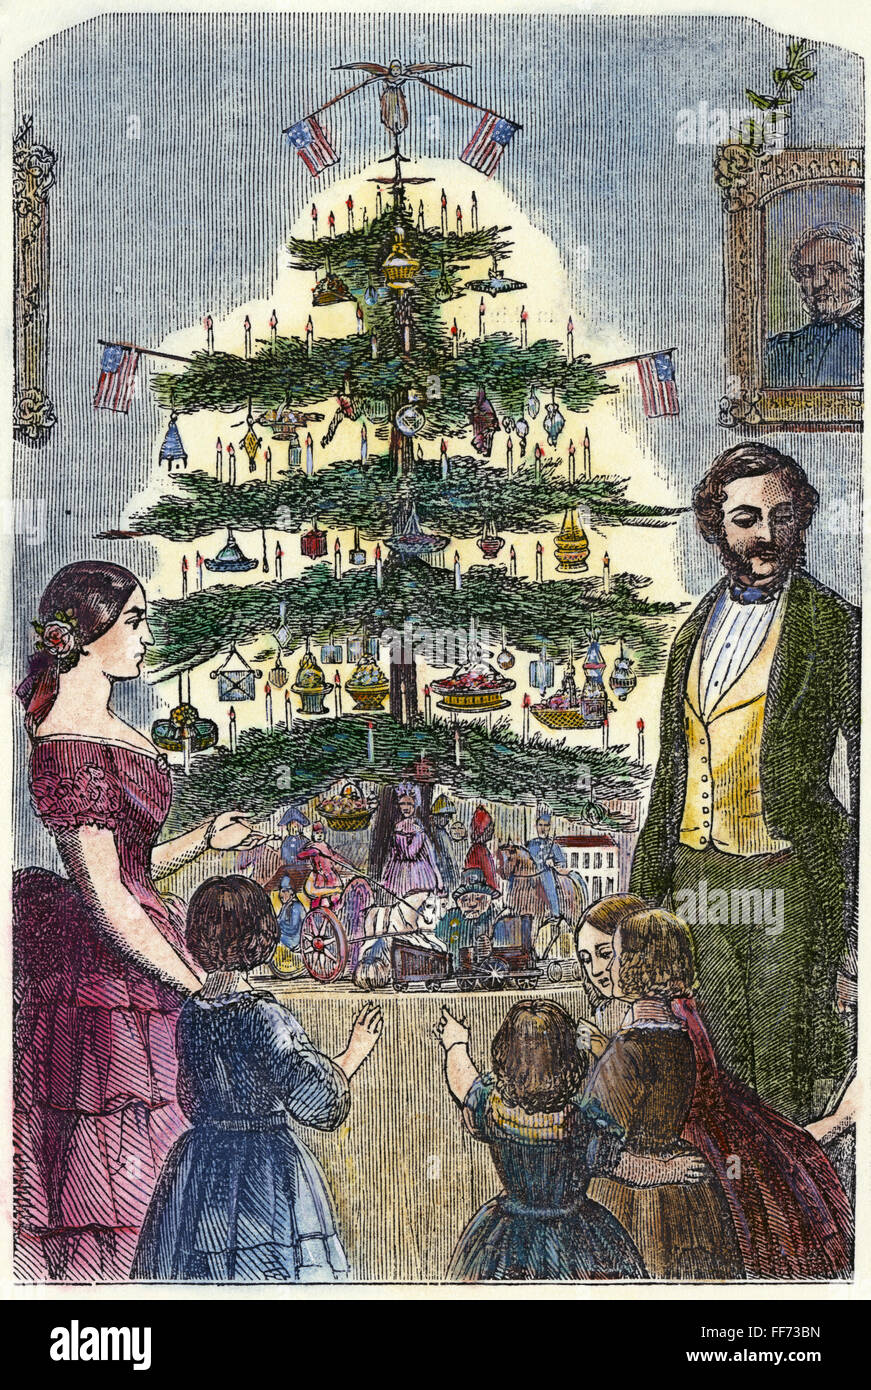 CHRISTMAS TREE, 1864. /nWood engraving, American, 1864. Stock Photo